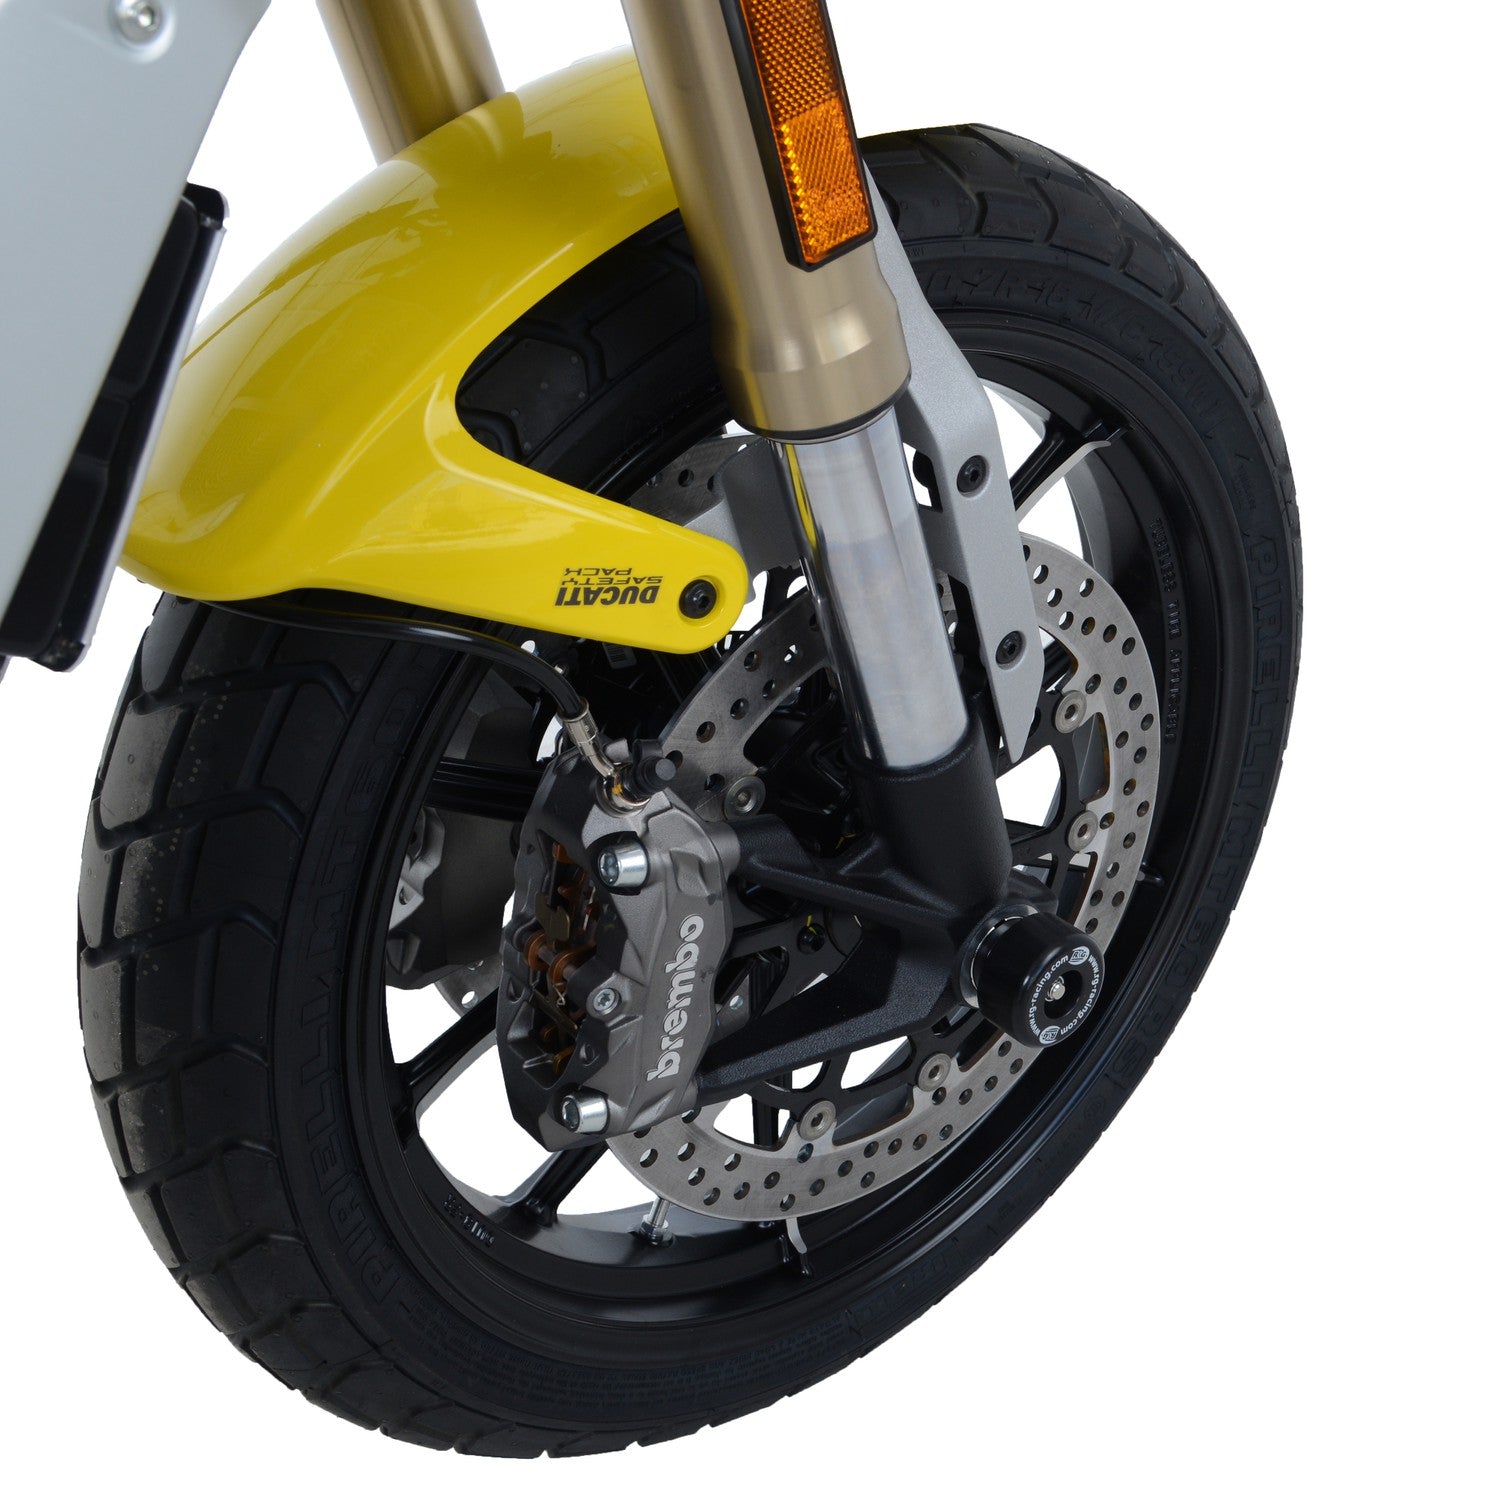 R&G Front Fork Protector for Ducati Scrambler 1100